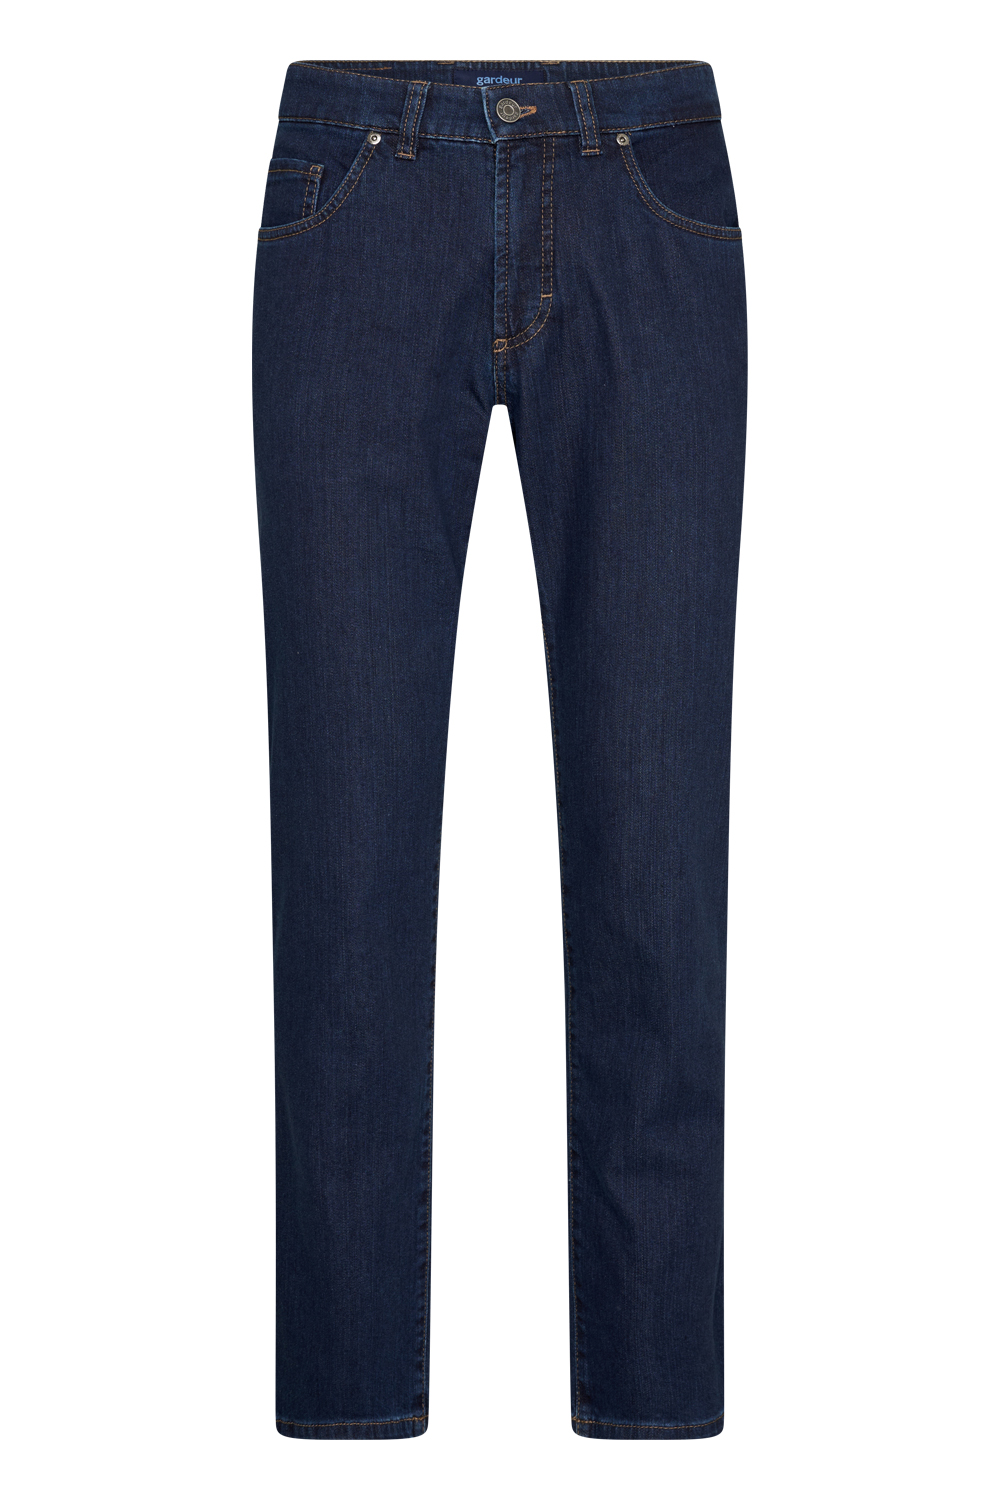 Gardeur Jeans Hose Regular Fit Indigo blau Nevio 11  470181 69